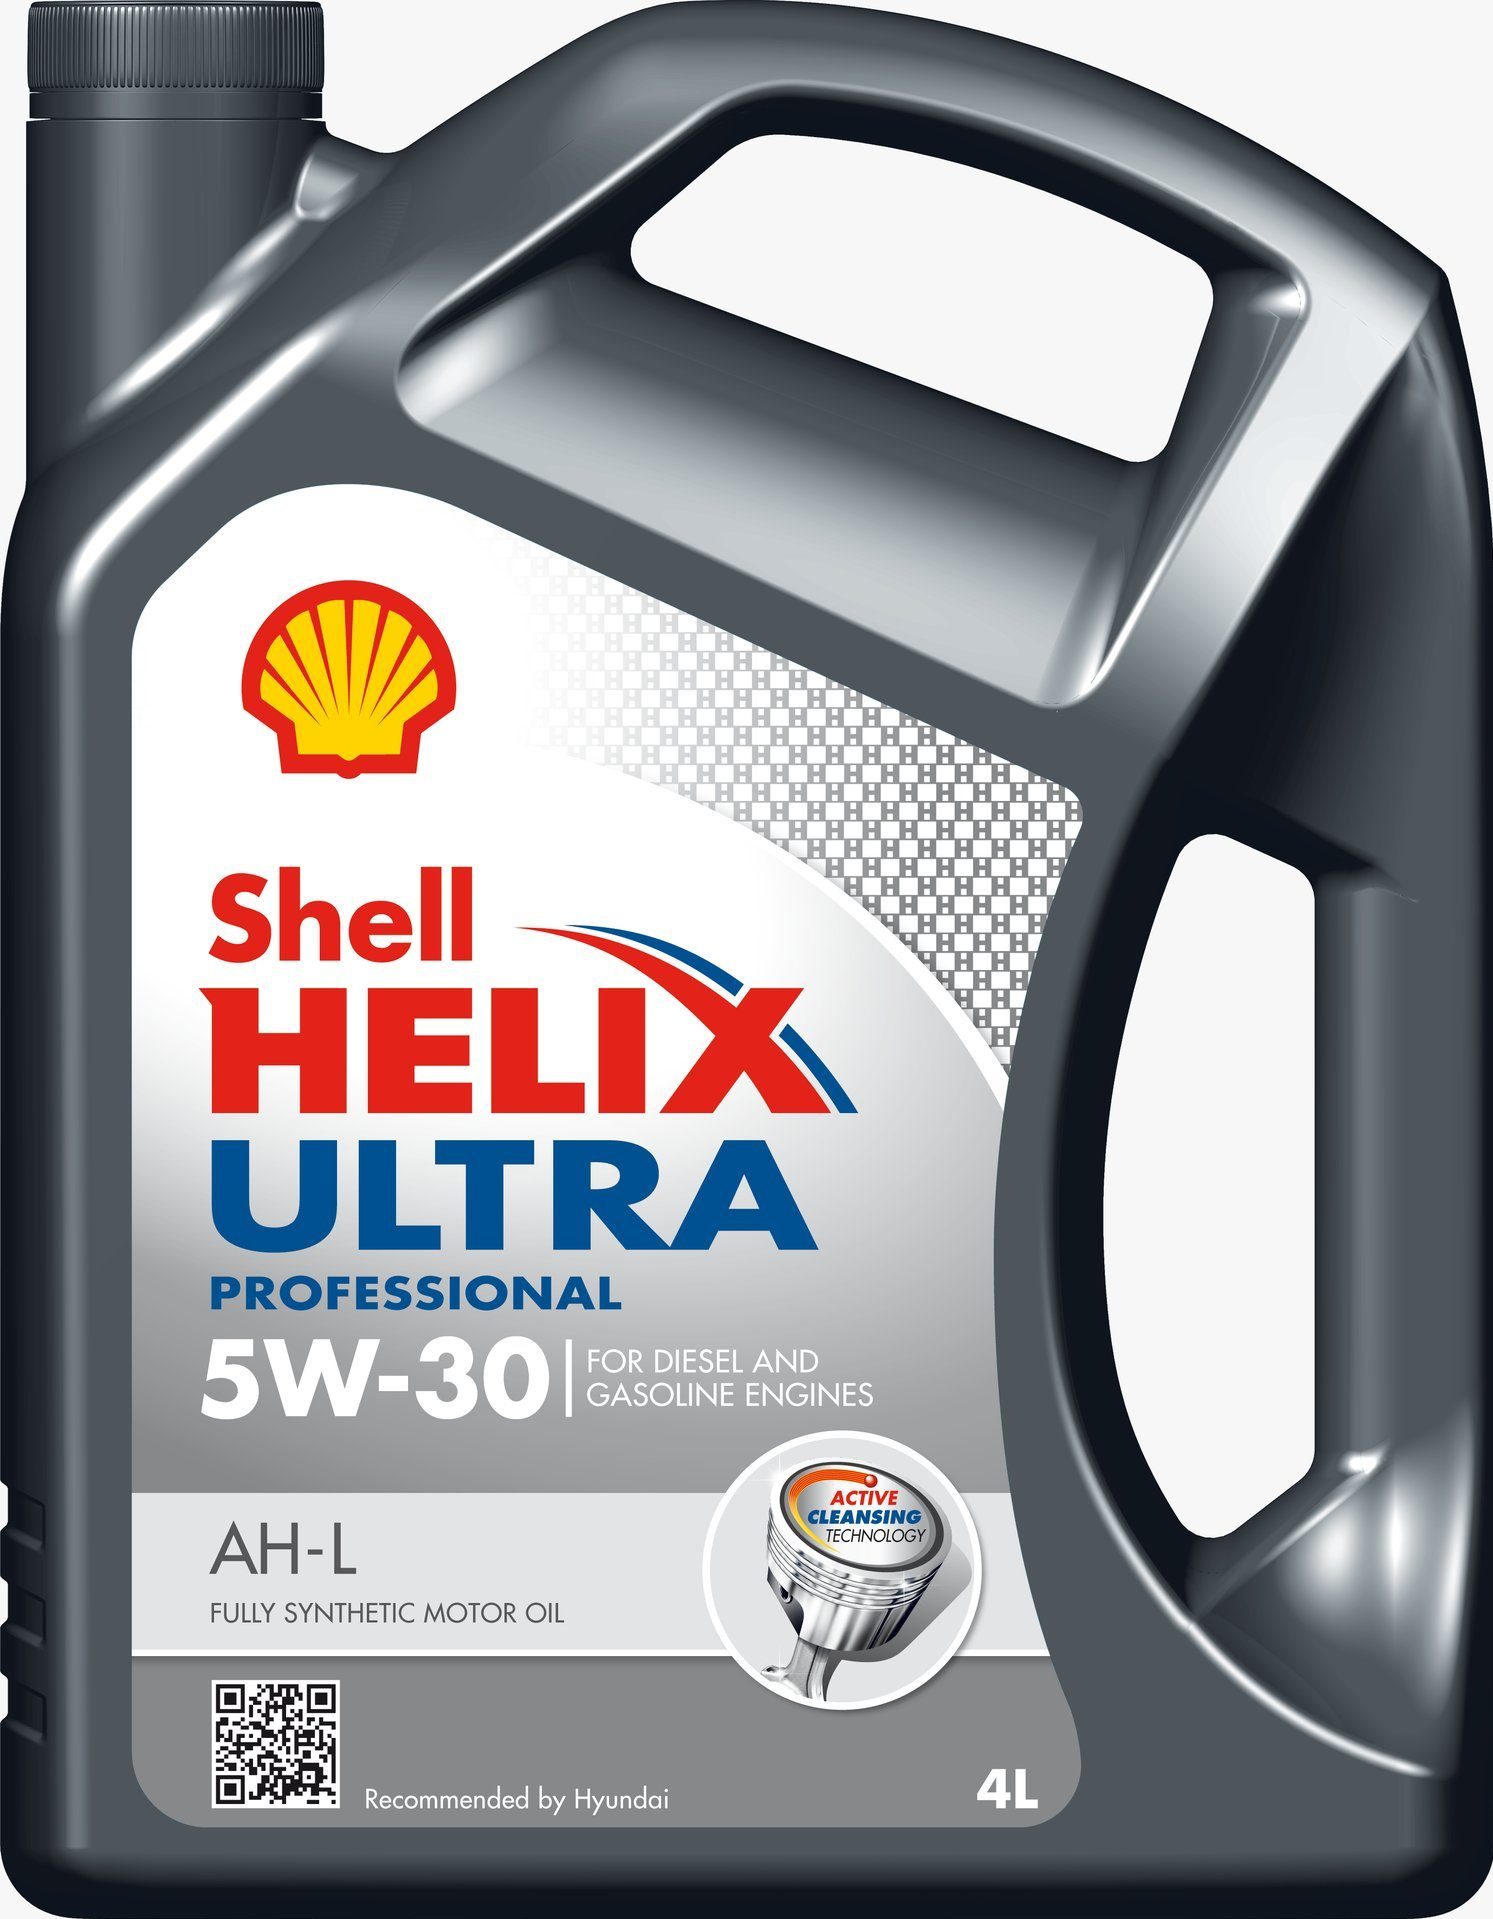 Shell Helix Ultra Professional AH-L 5W-30